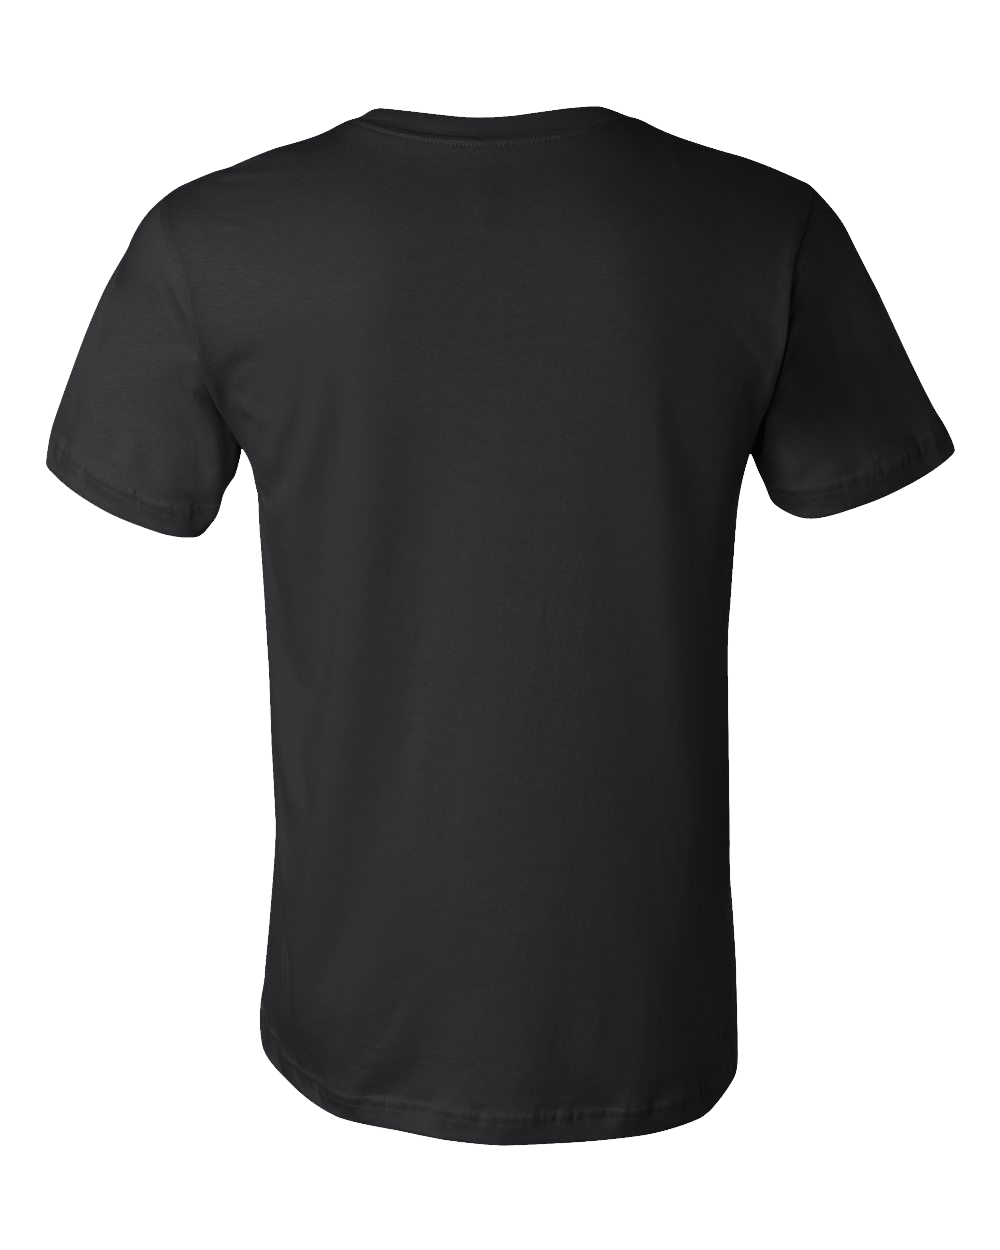 Standard Black Mayodan, NC | Retro, Vintage Style North Carolina Pride  T-shirt